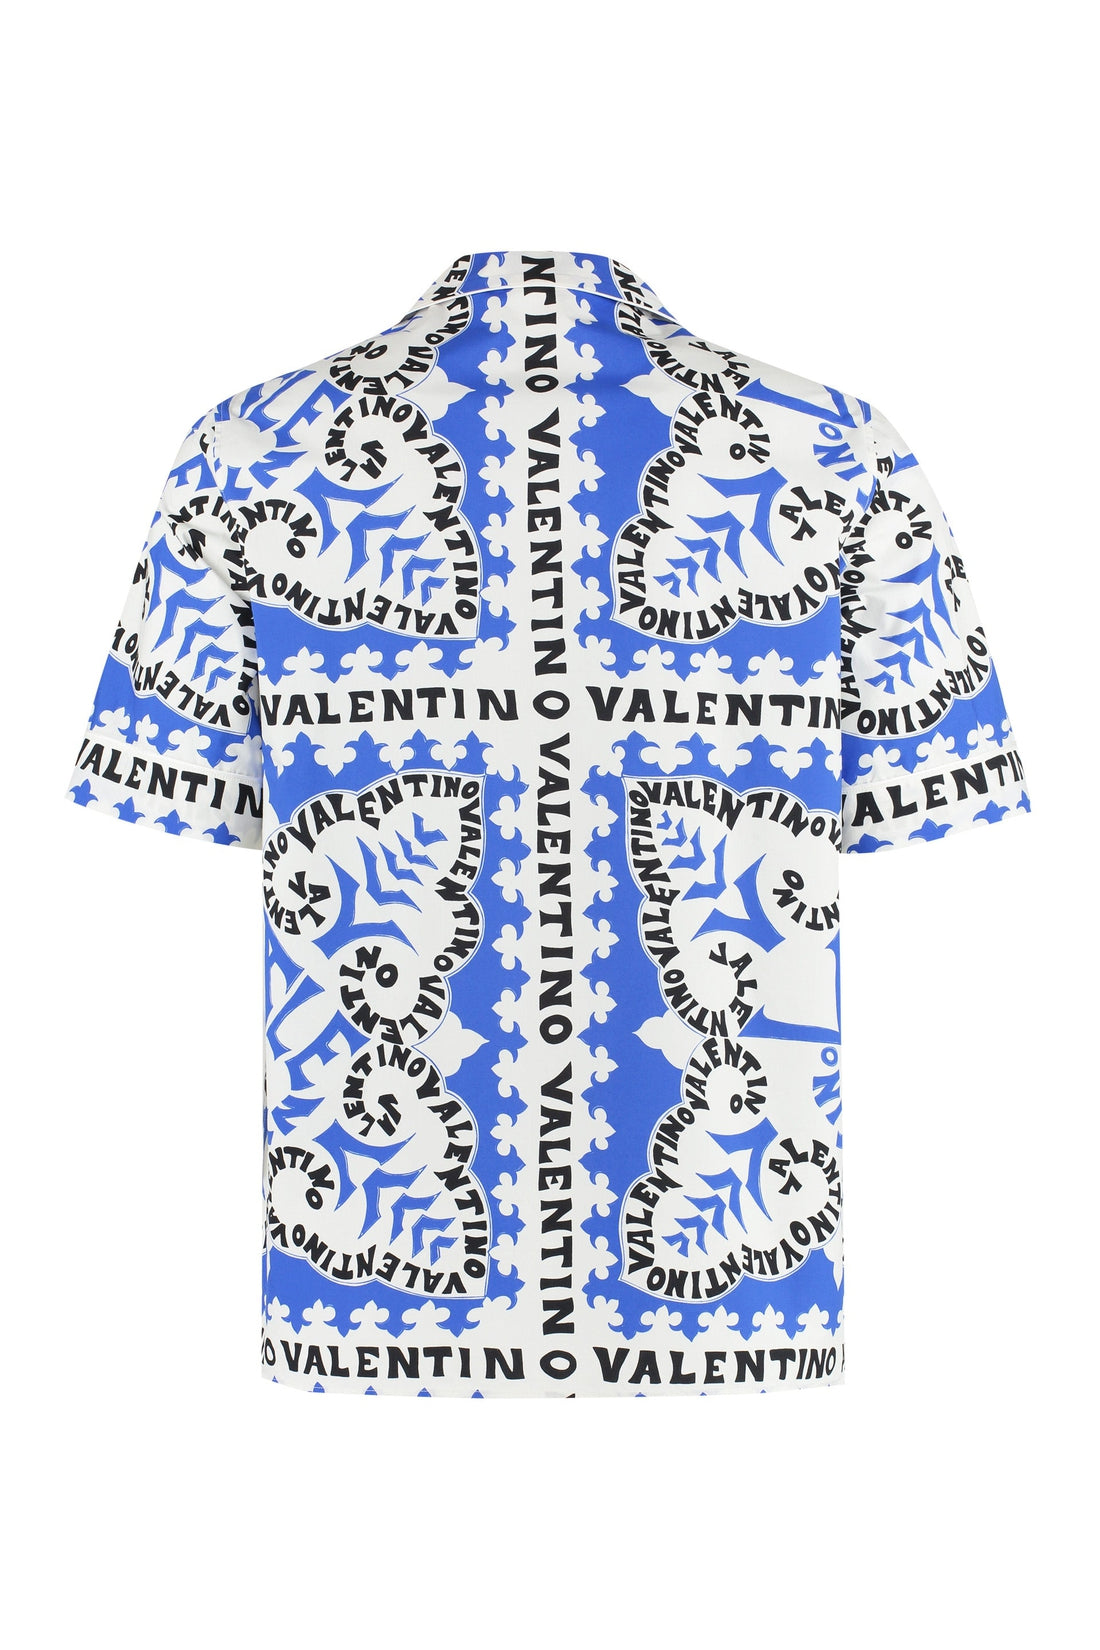 Valentino-OUTLET-SALE-Printed cotton shirt-ARCHIVIST